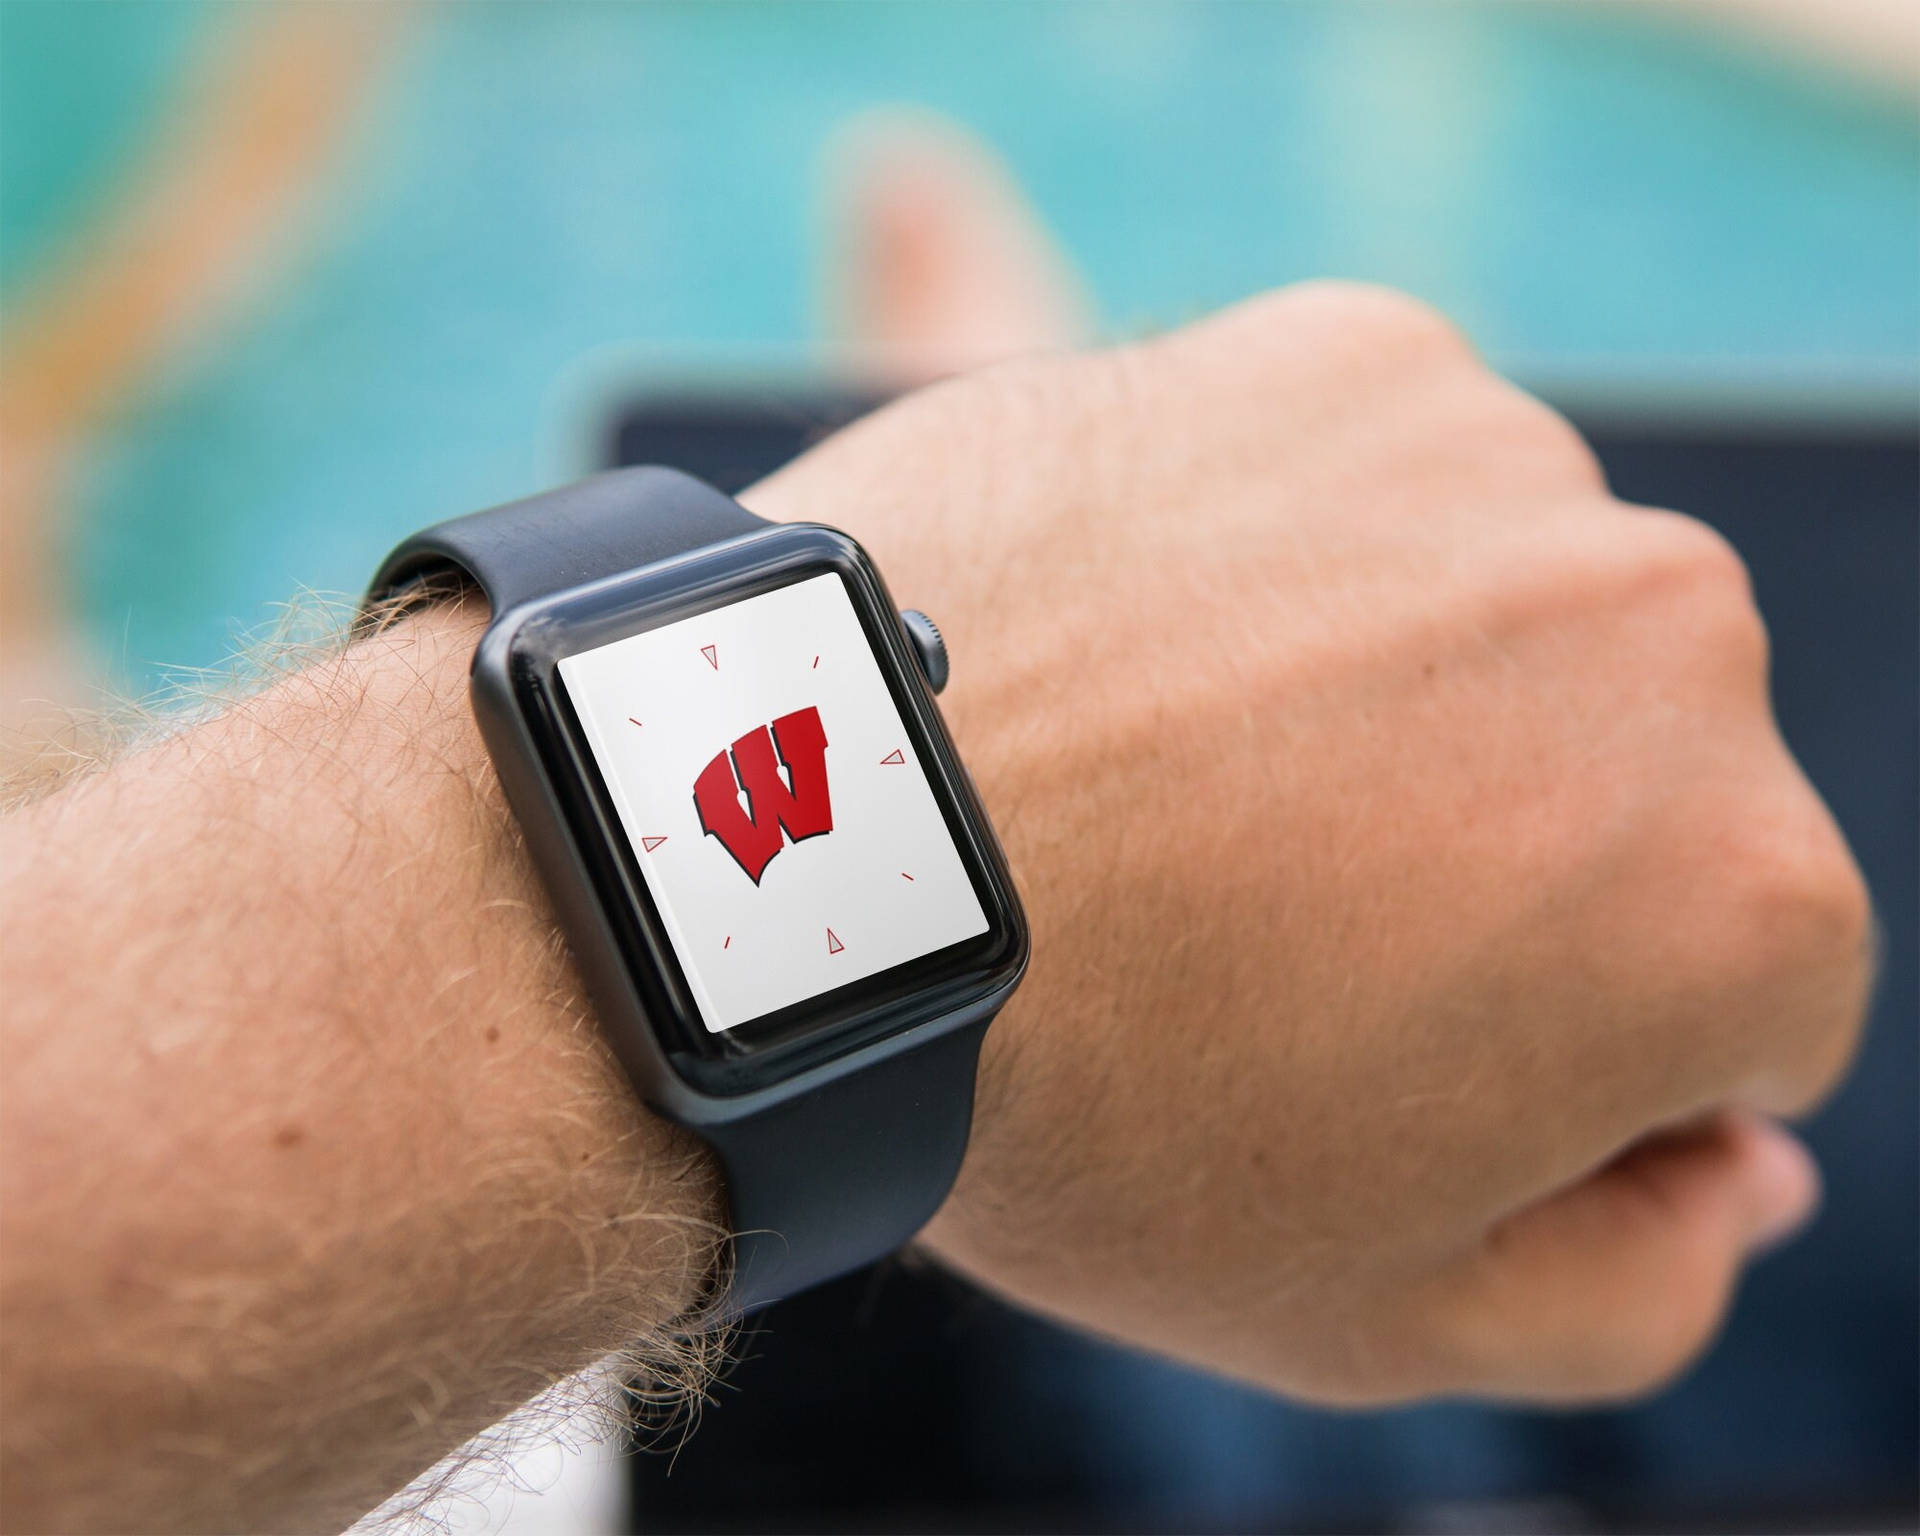 University Of Wisconsin-madison Wrist Watch Wallpaper